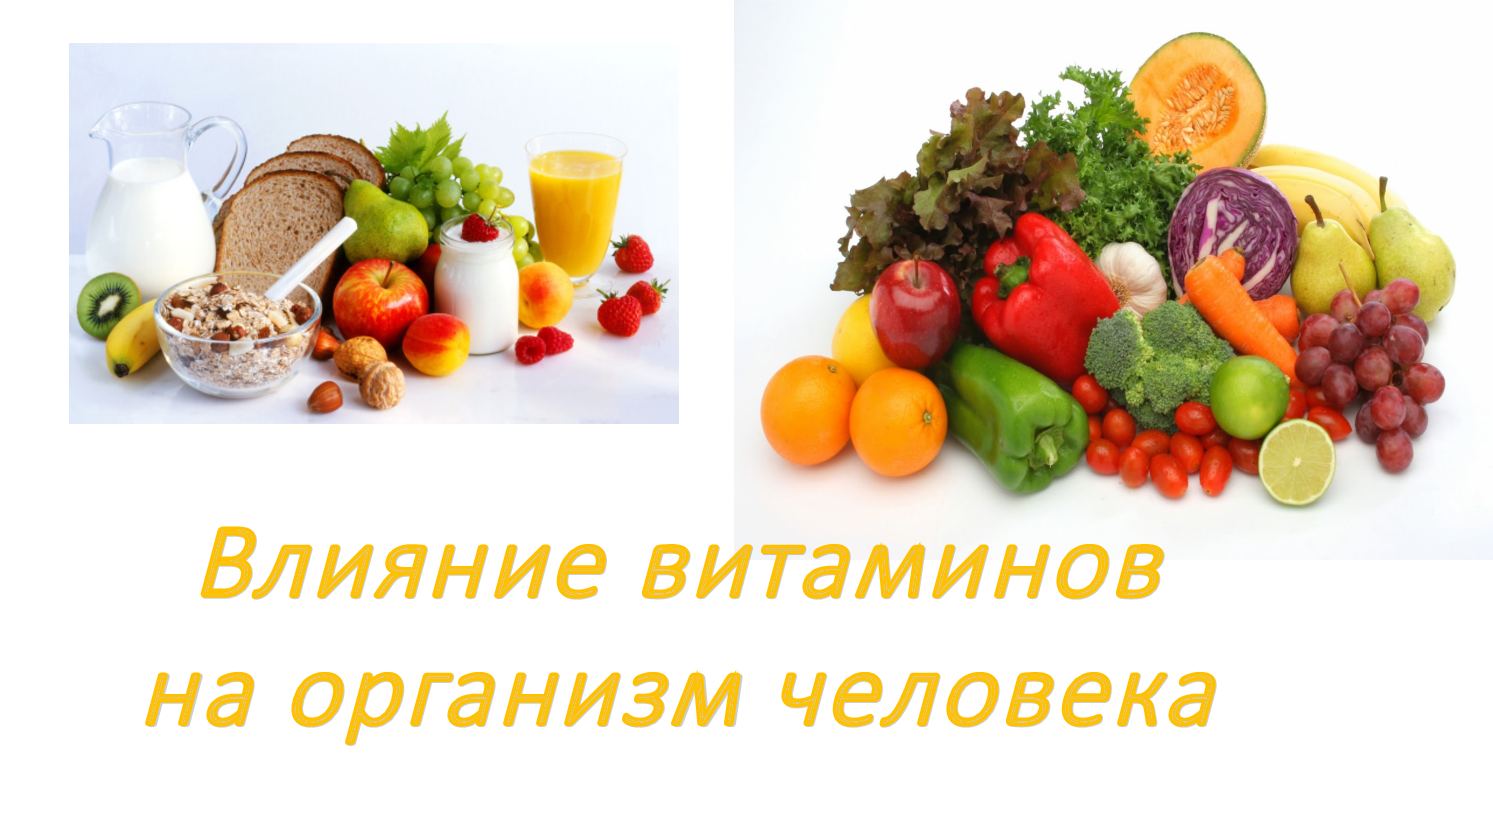 Витамины в овощах